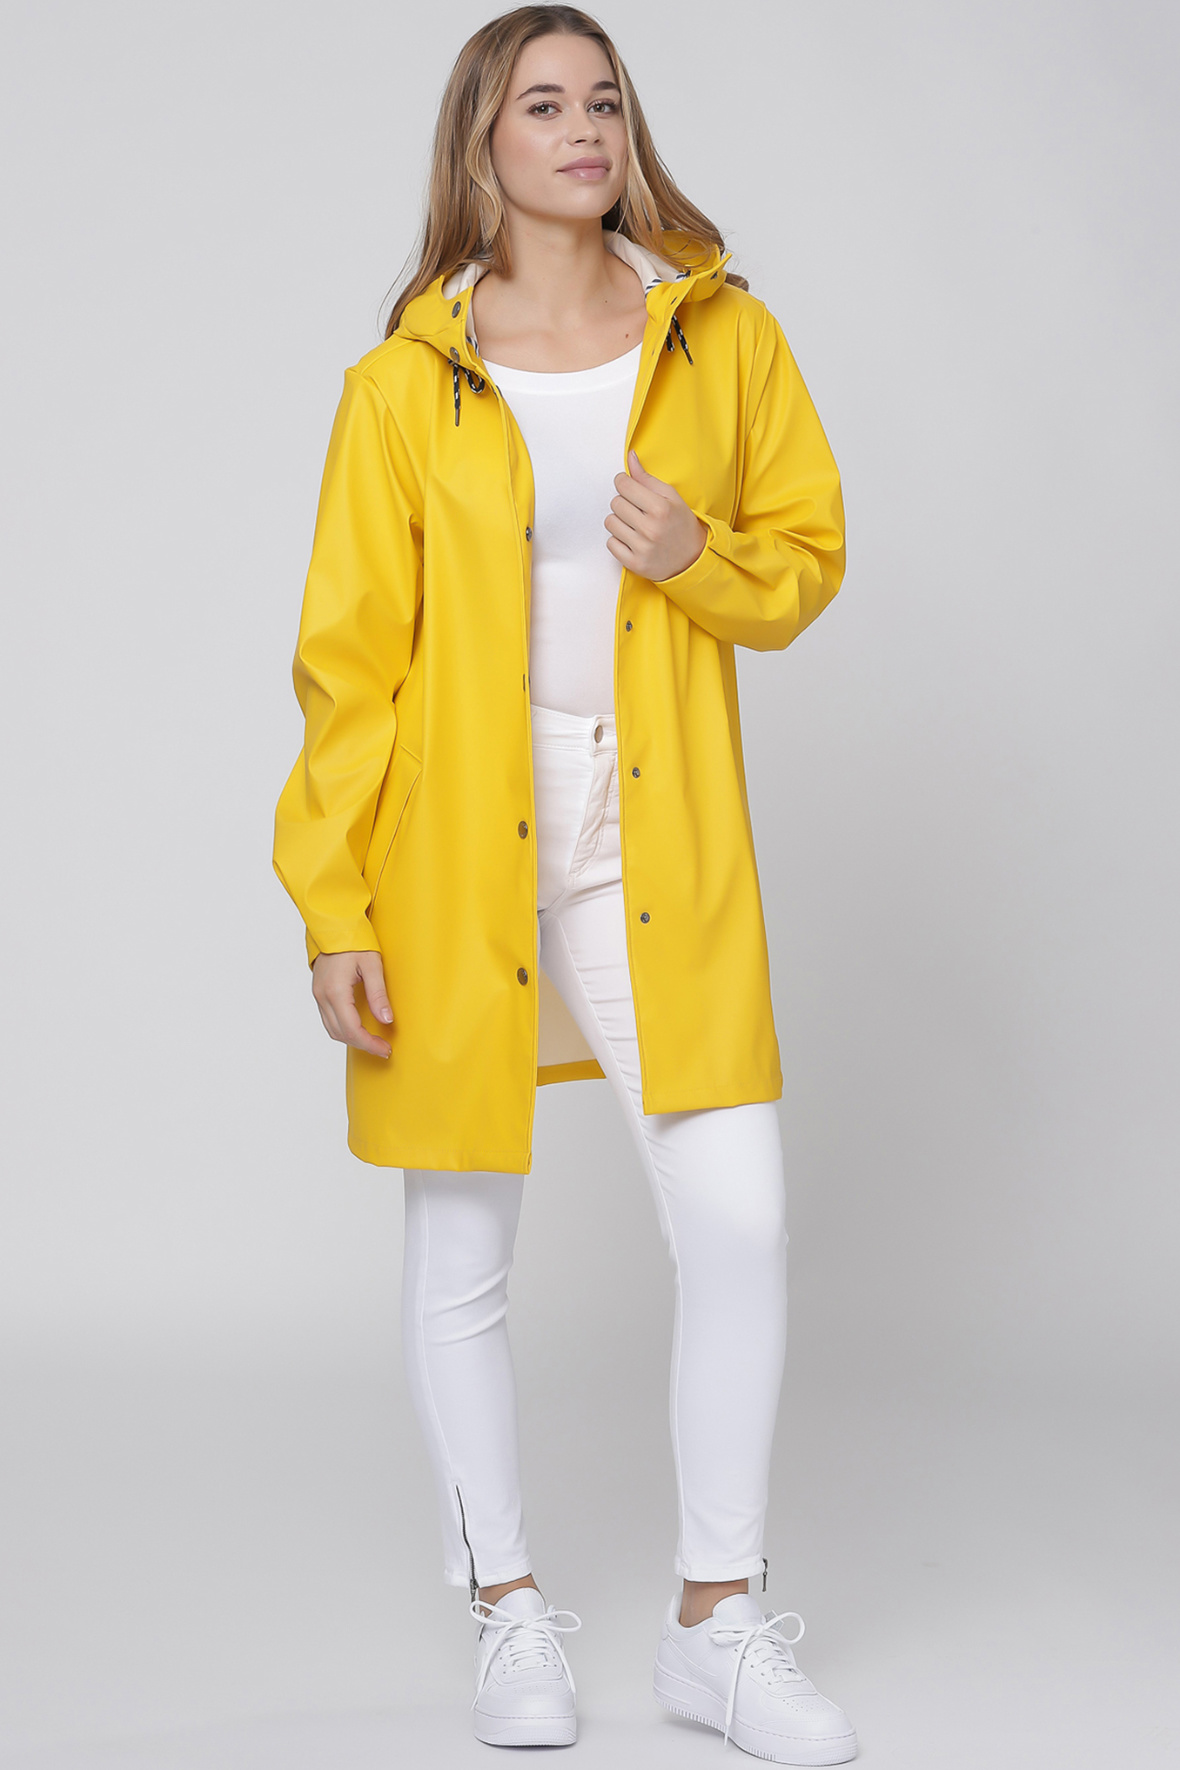 Hyret kilometer procedure Etage regnfrakke regnjakke og regntøj i ensfarvet gul til damer - Hos Lohse